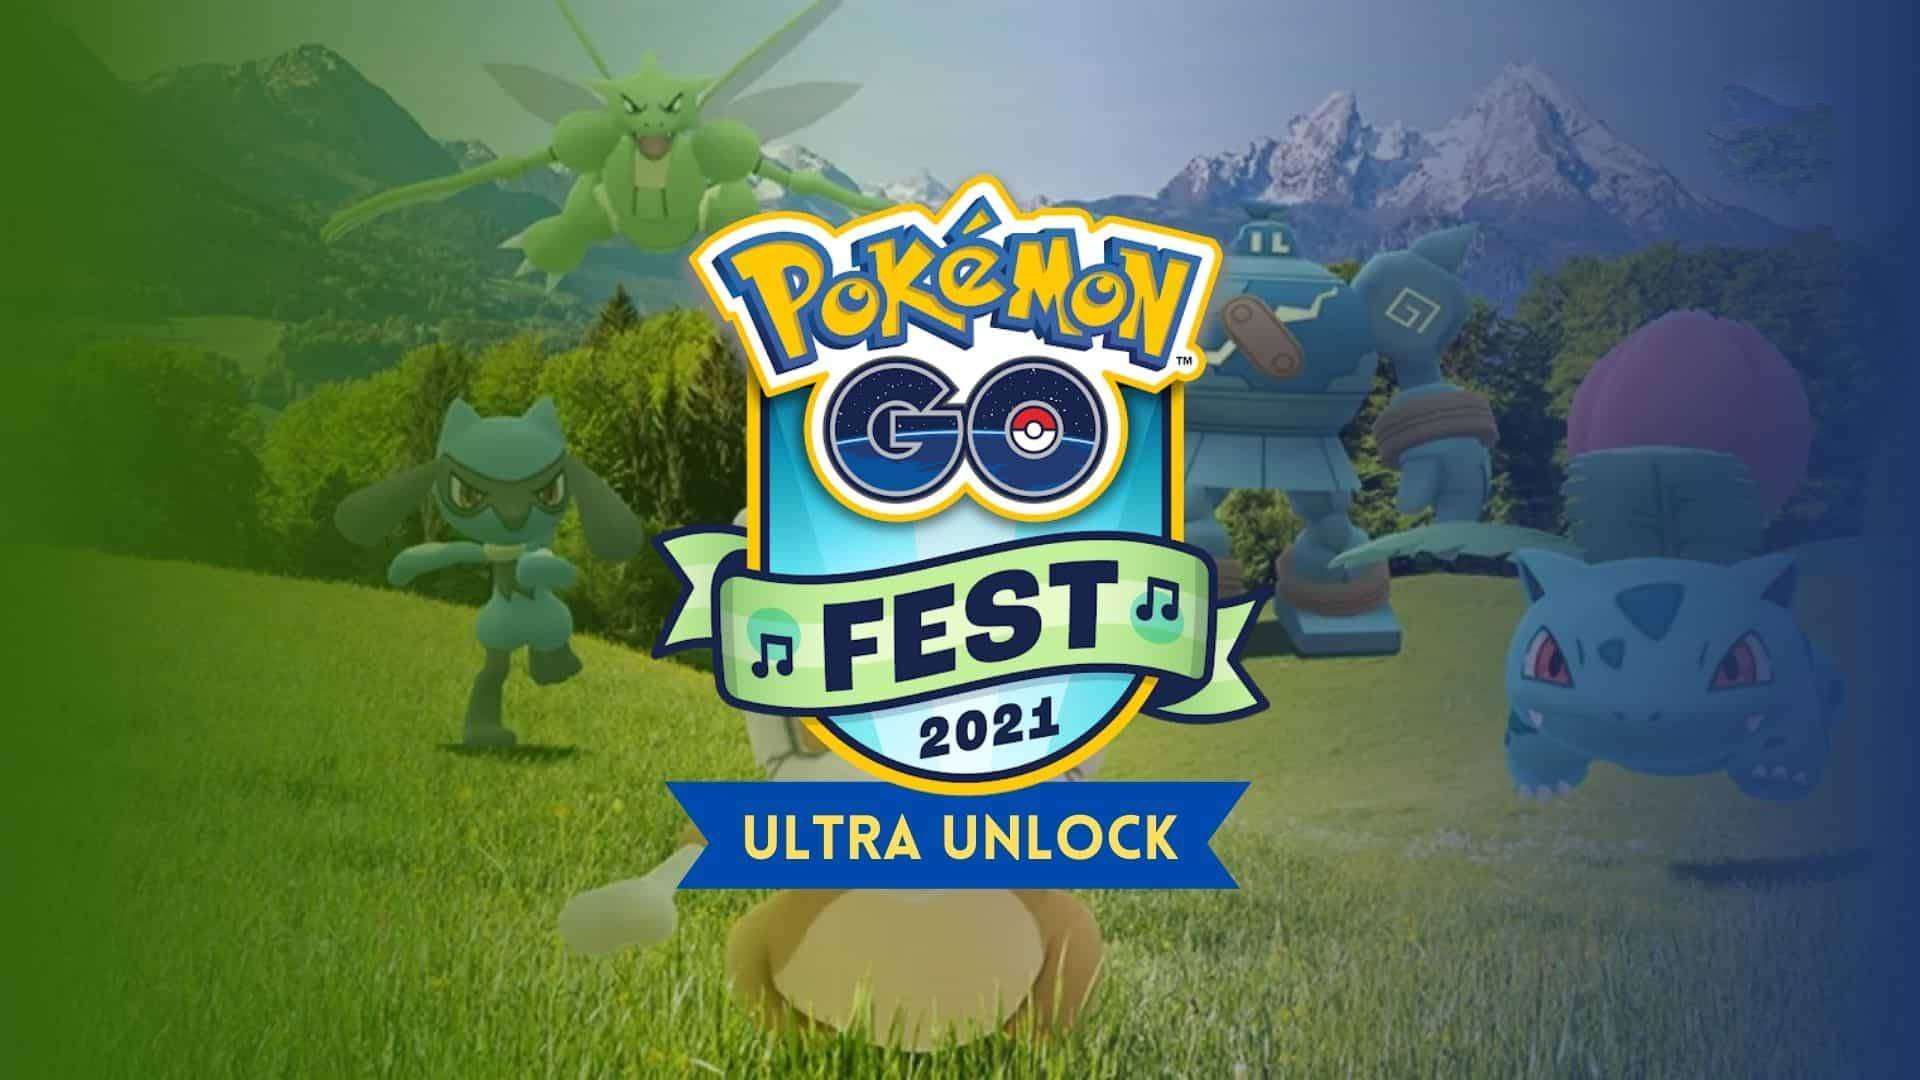 Pokemon Go Fest 2021 Ultra Unlock challenge